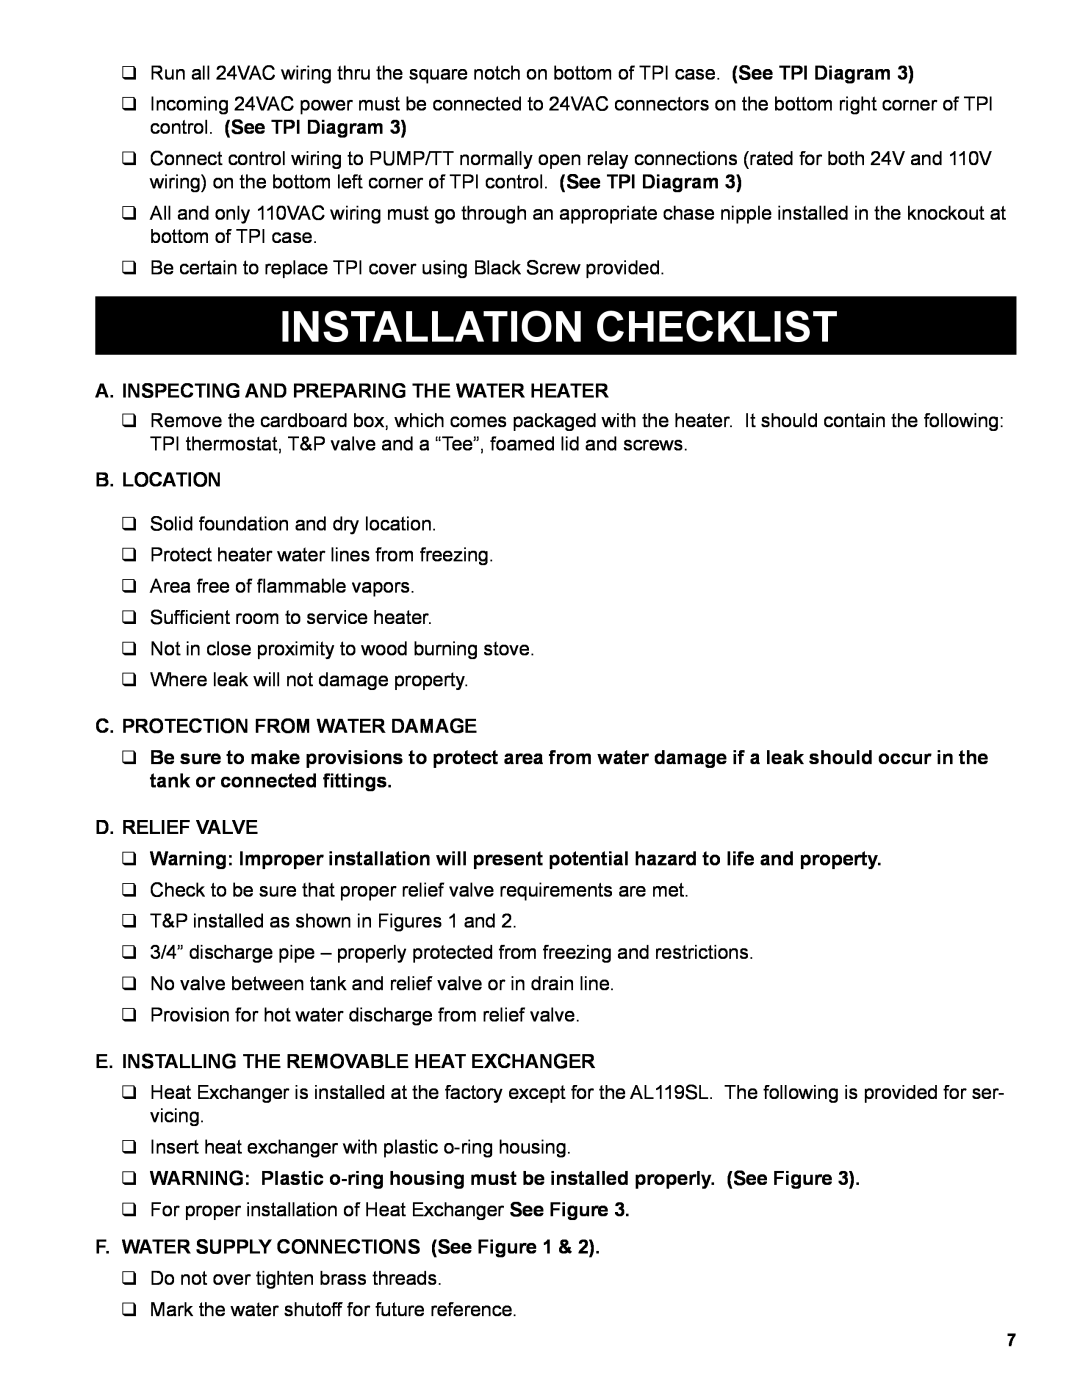 Burnham AL SL warranty Installation Checklist, A.Inspecting And Preparing The Water Heater, B.Location, D.Relief Valve 